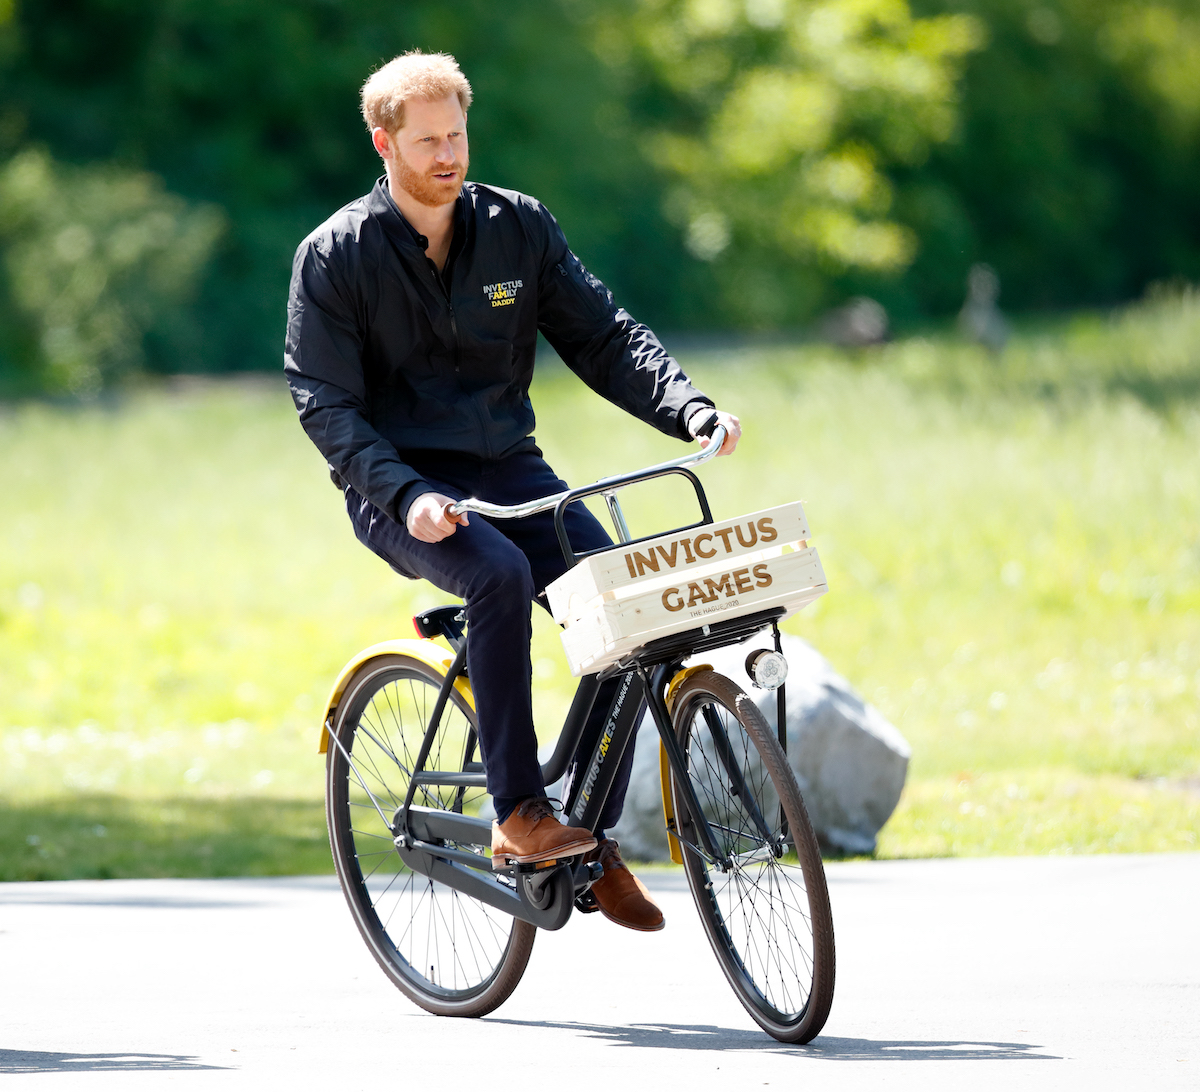 Prince Harry rides a bike